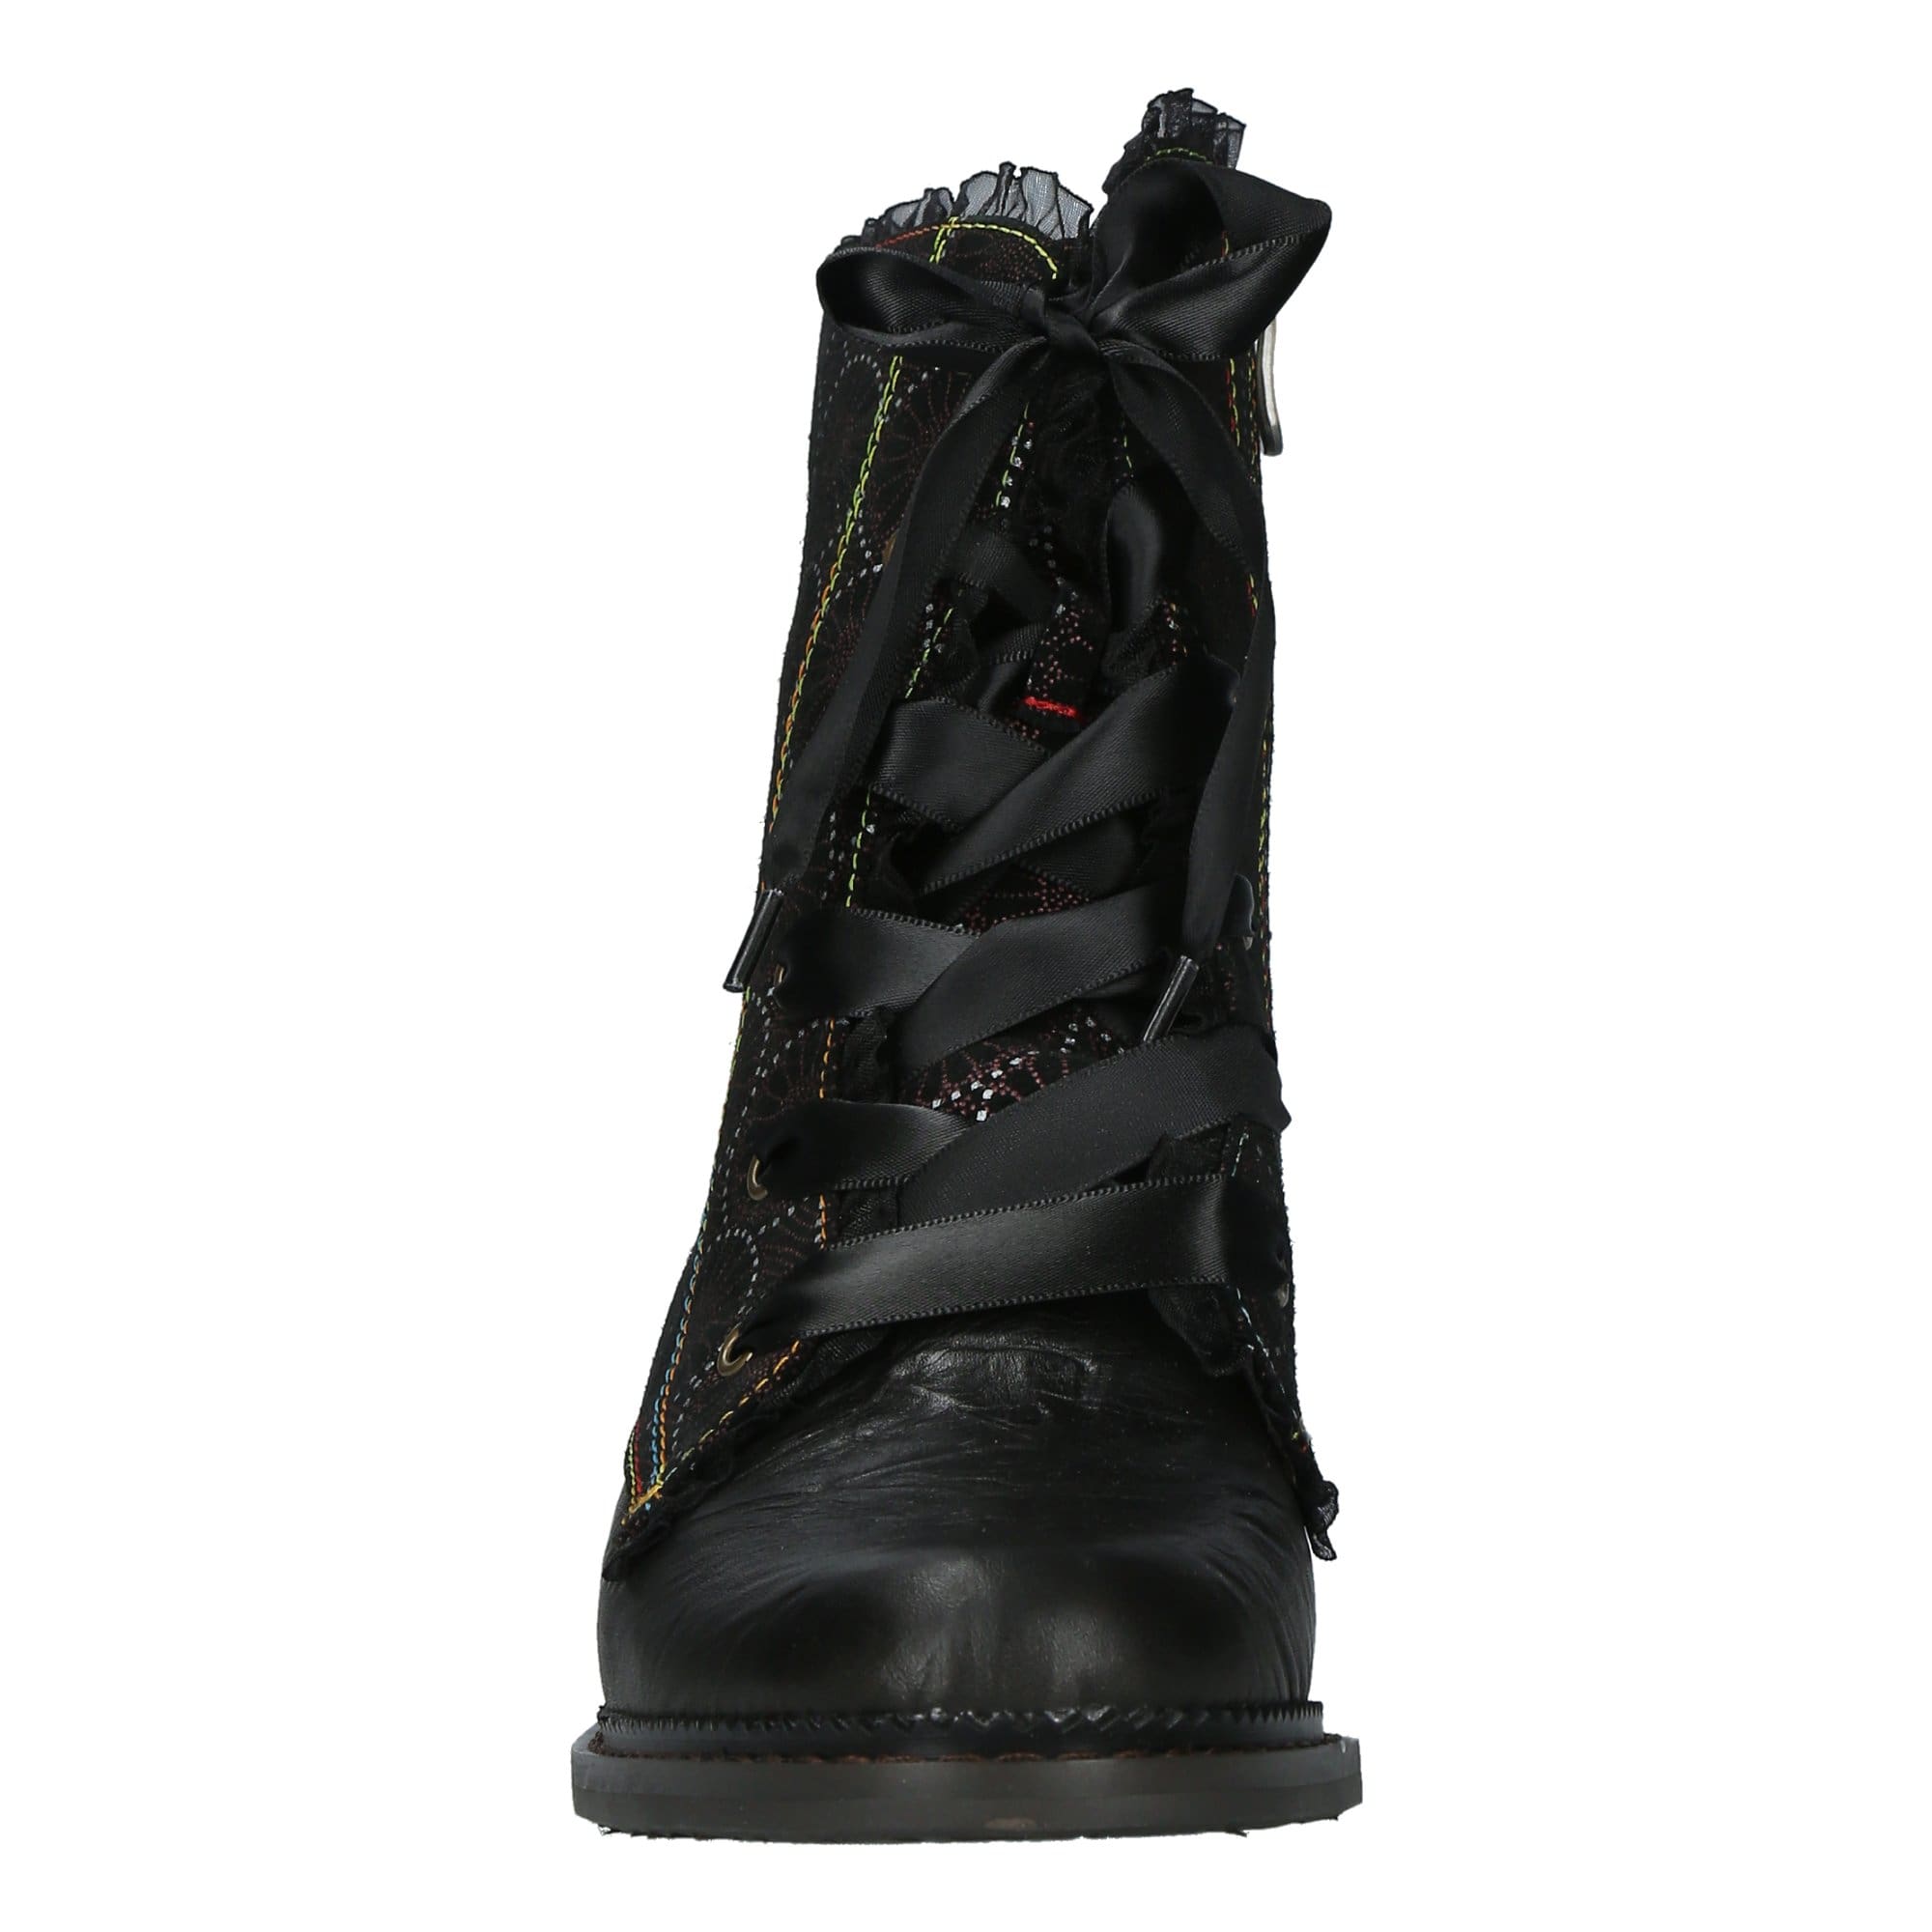 Shoe IACDINEO 05 - Boots